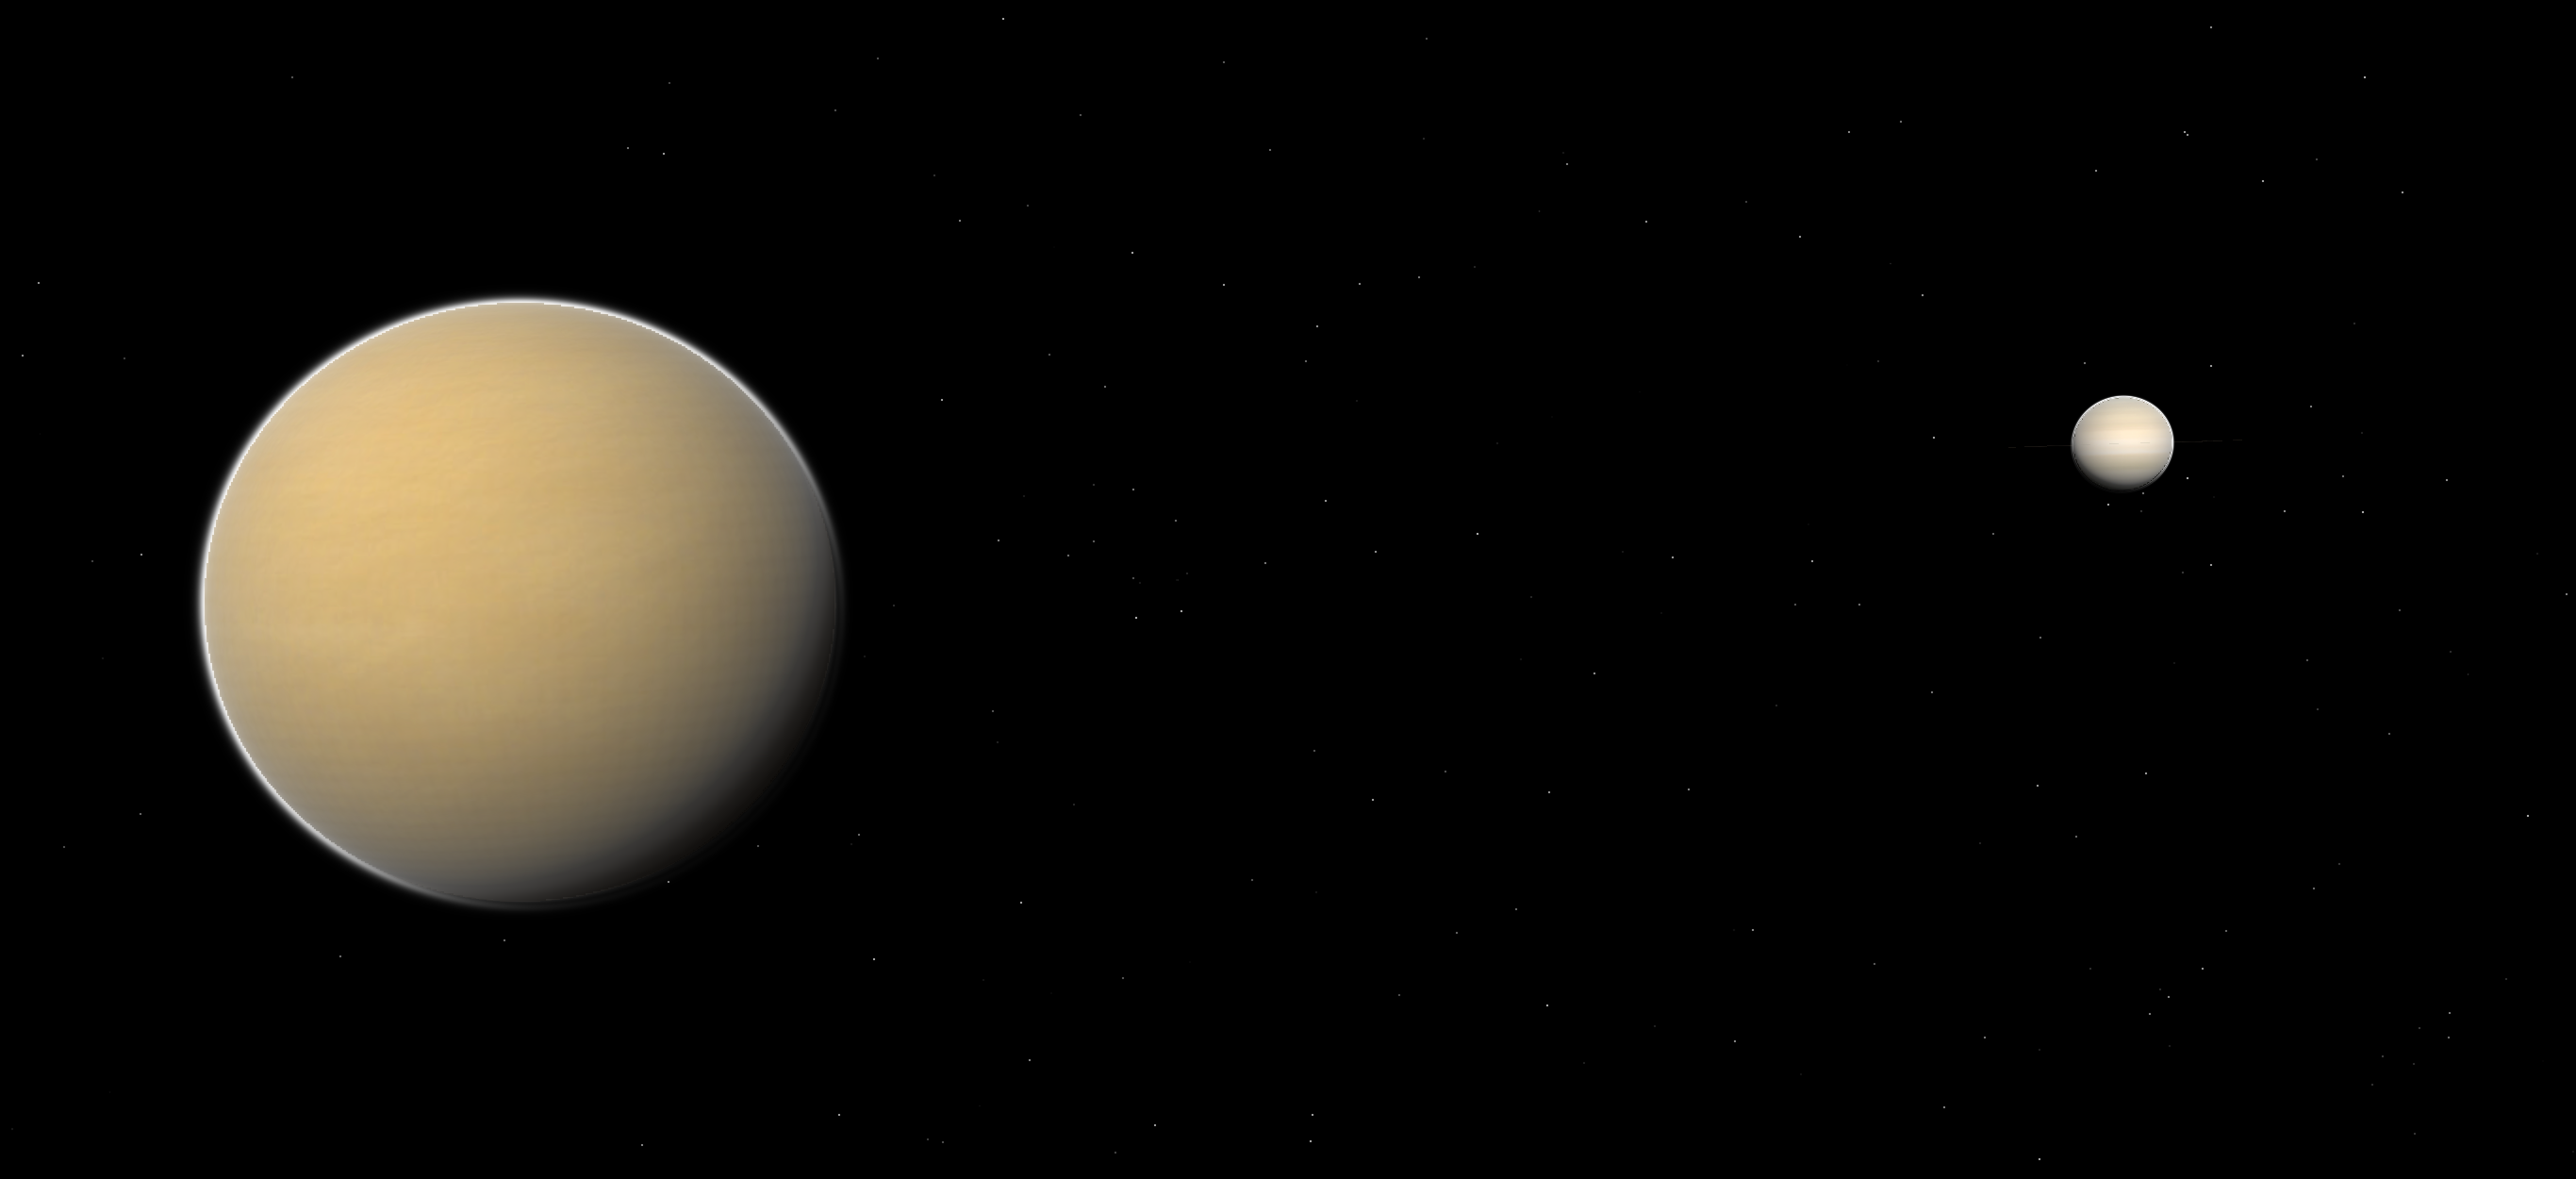 Titan orbiting Saturn